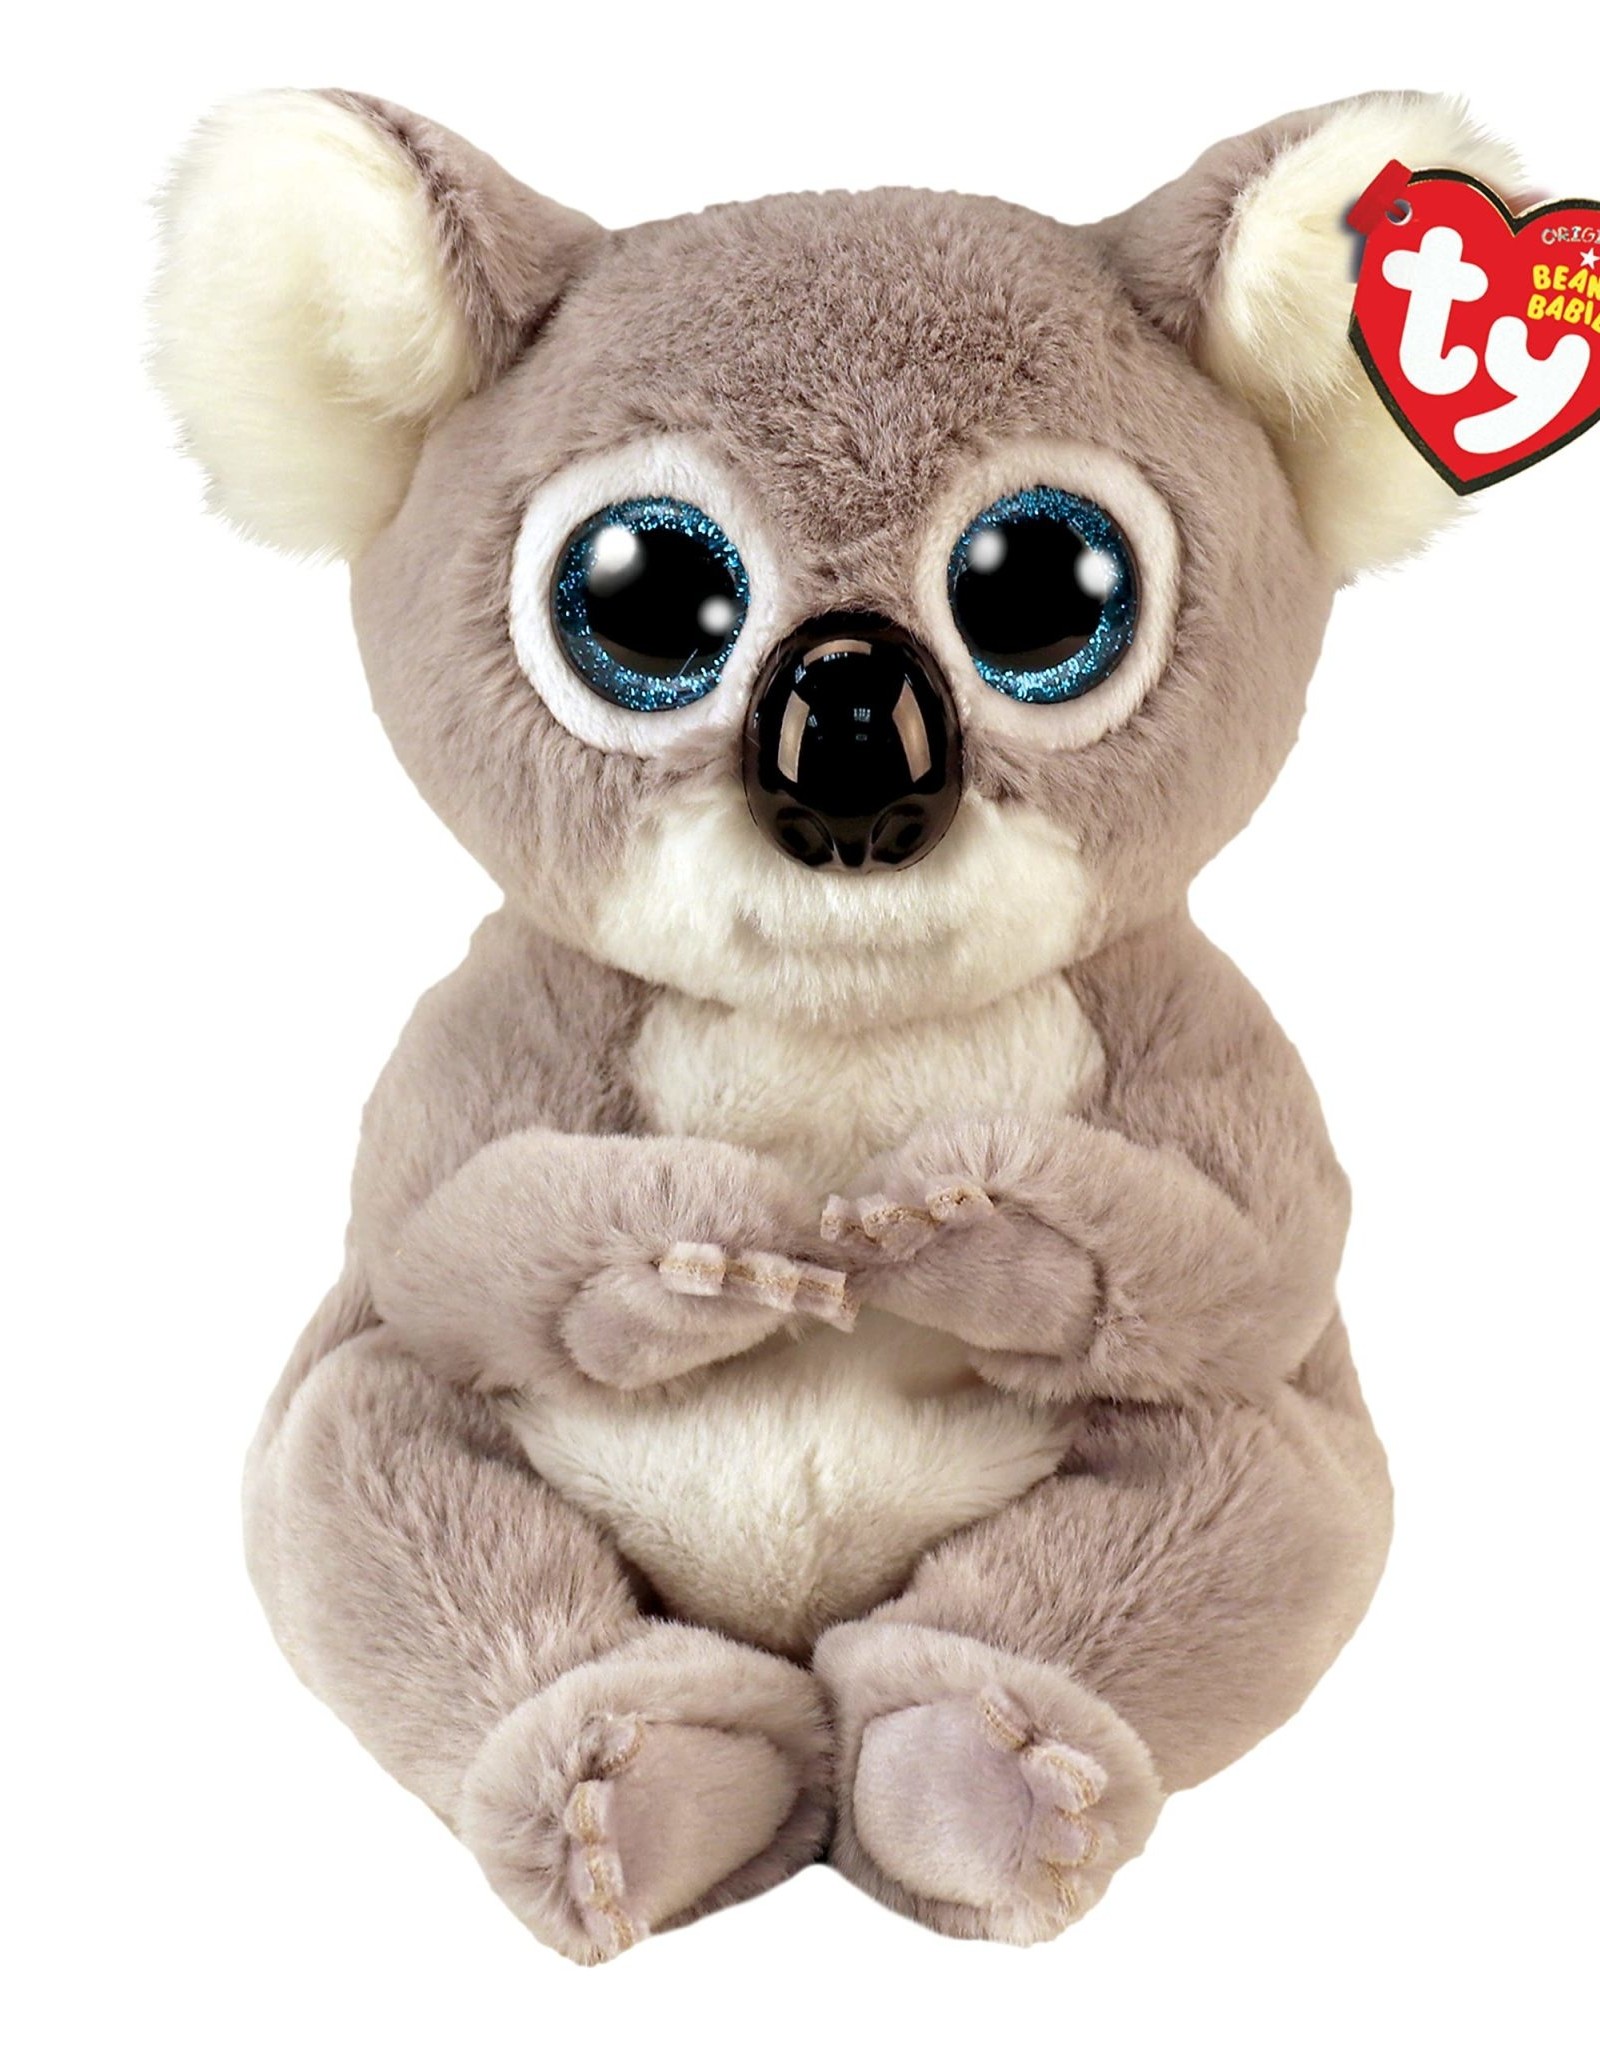 Melly Gray Koala  Bellies Reg